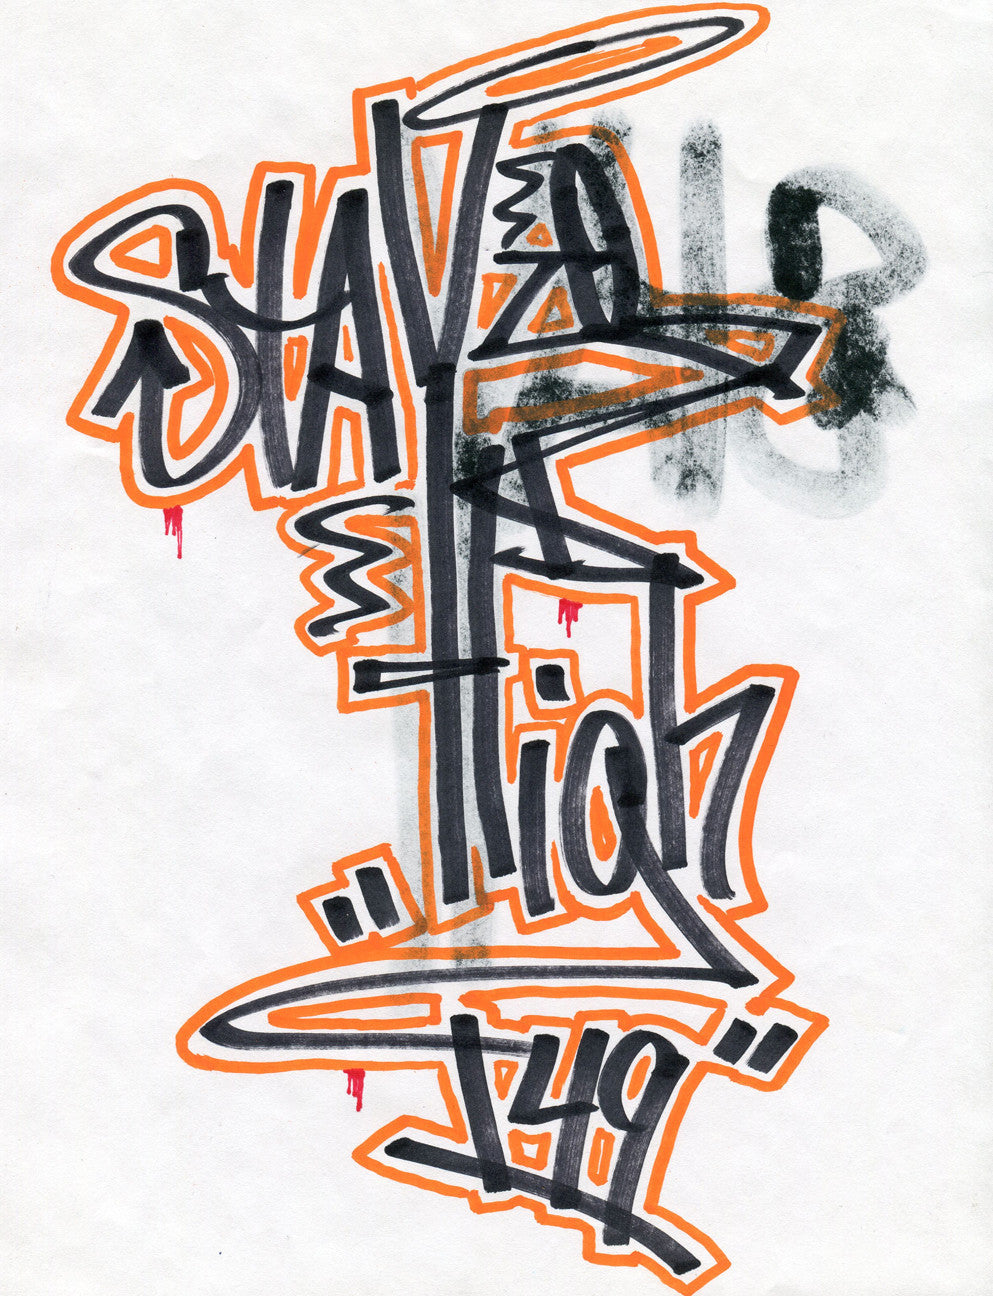 STAYHIGH 149 - "StayHigh" Black Book Drawing 5